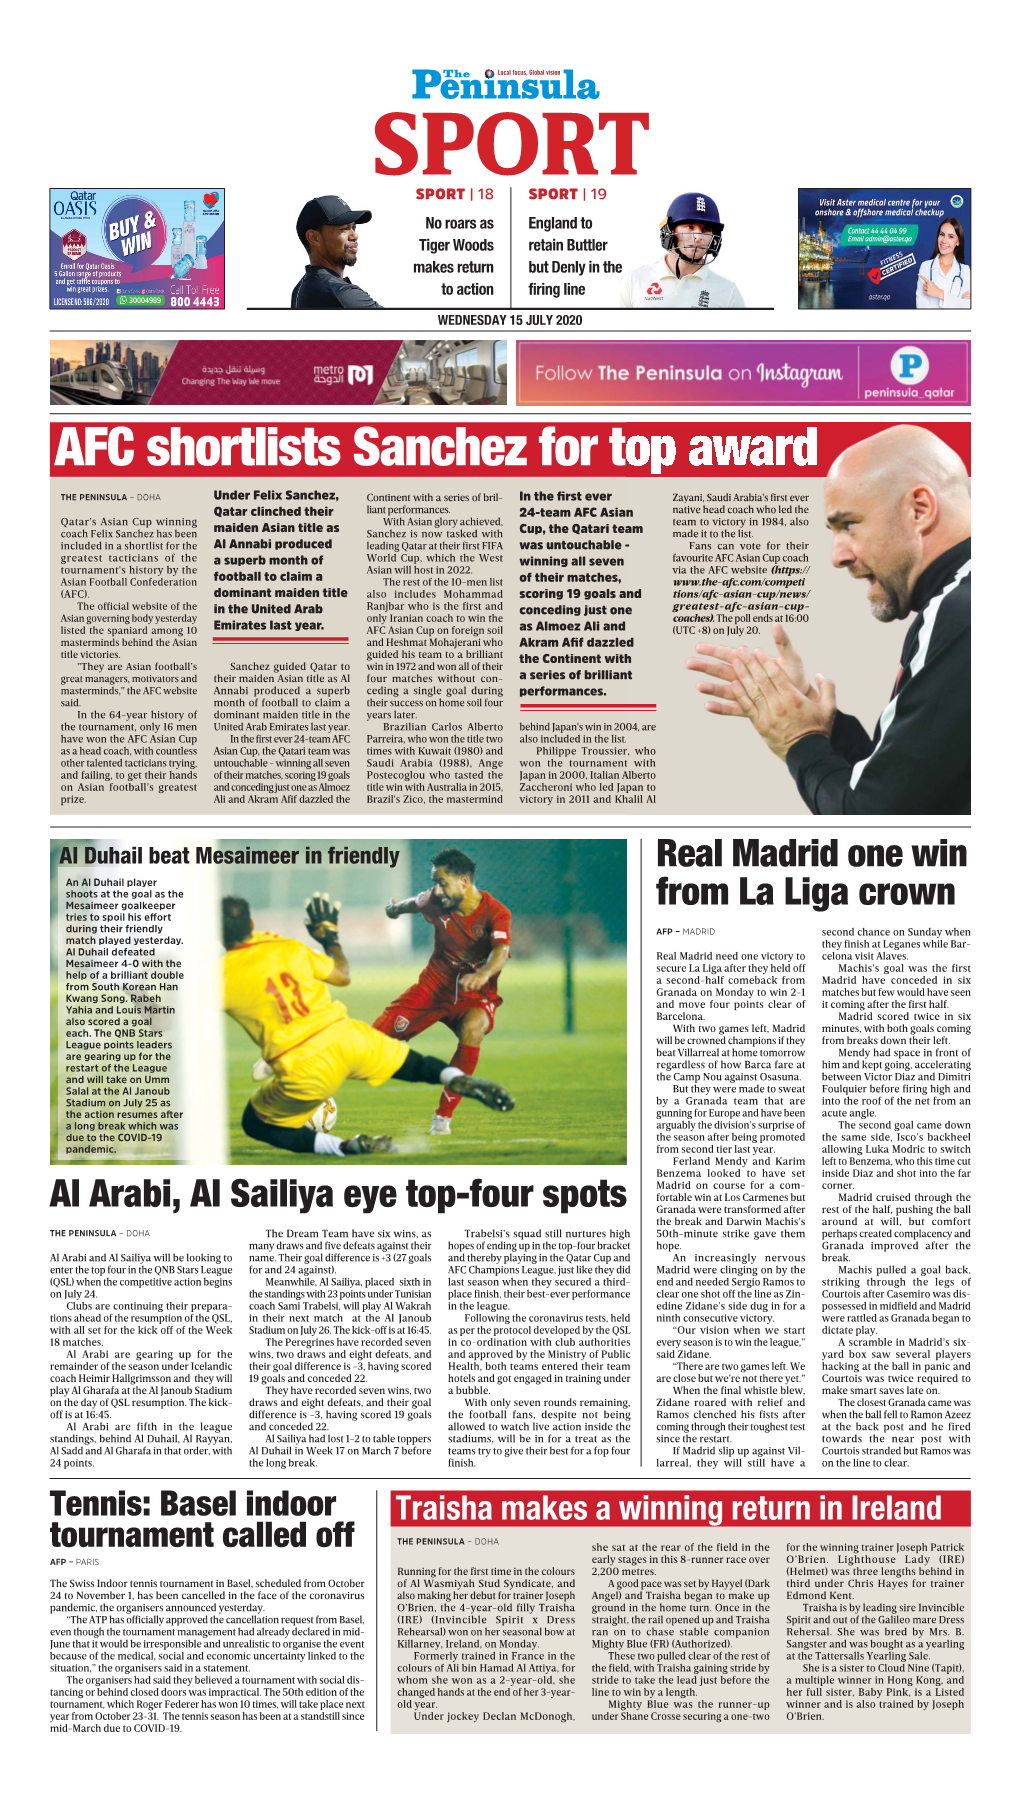 AFC Shortlists Sanchez for Top Award